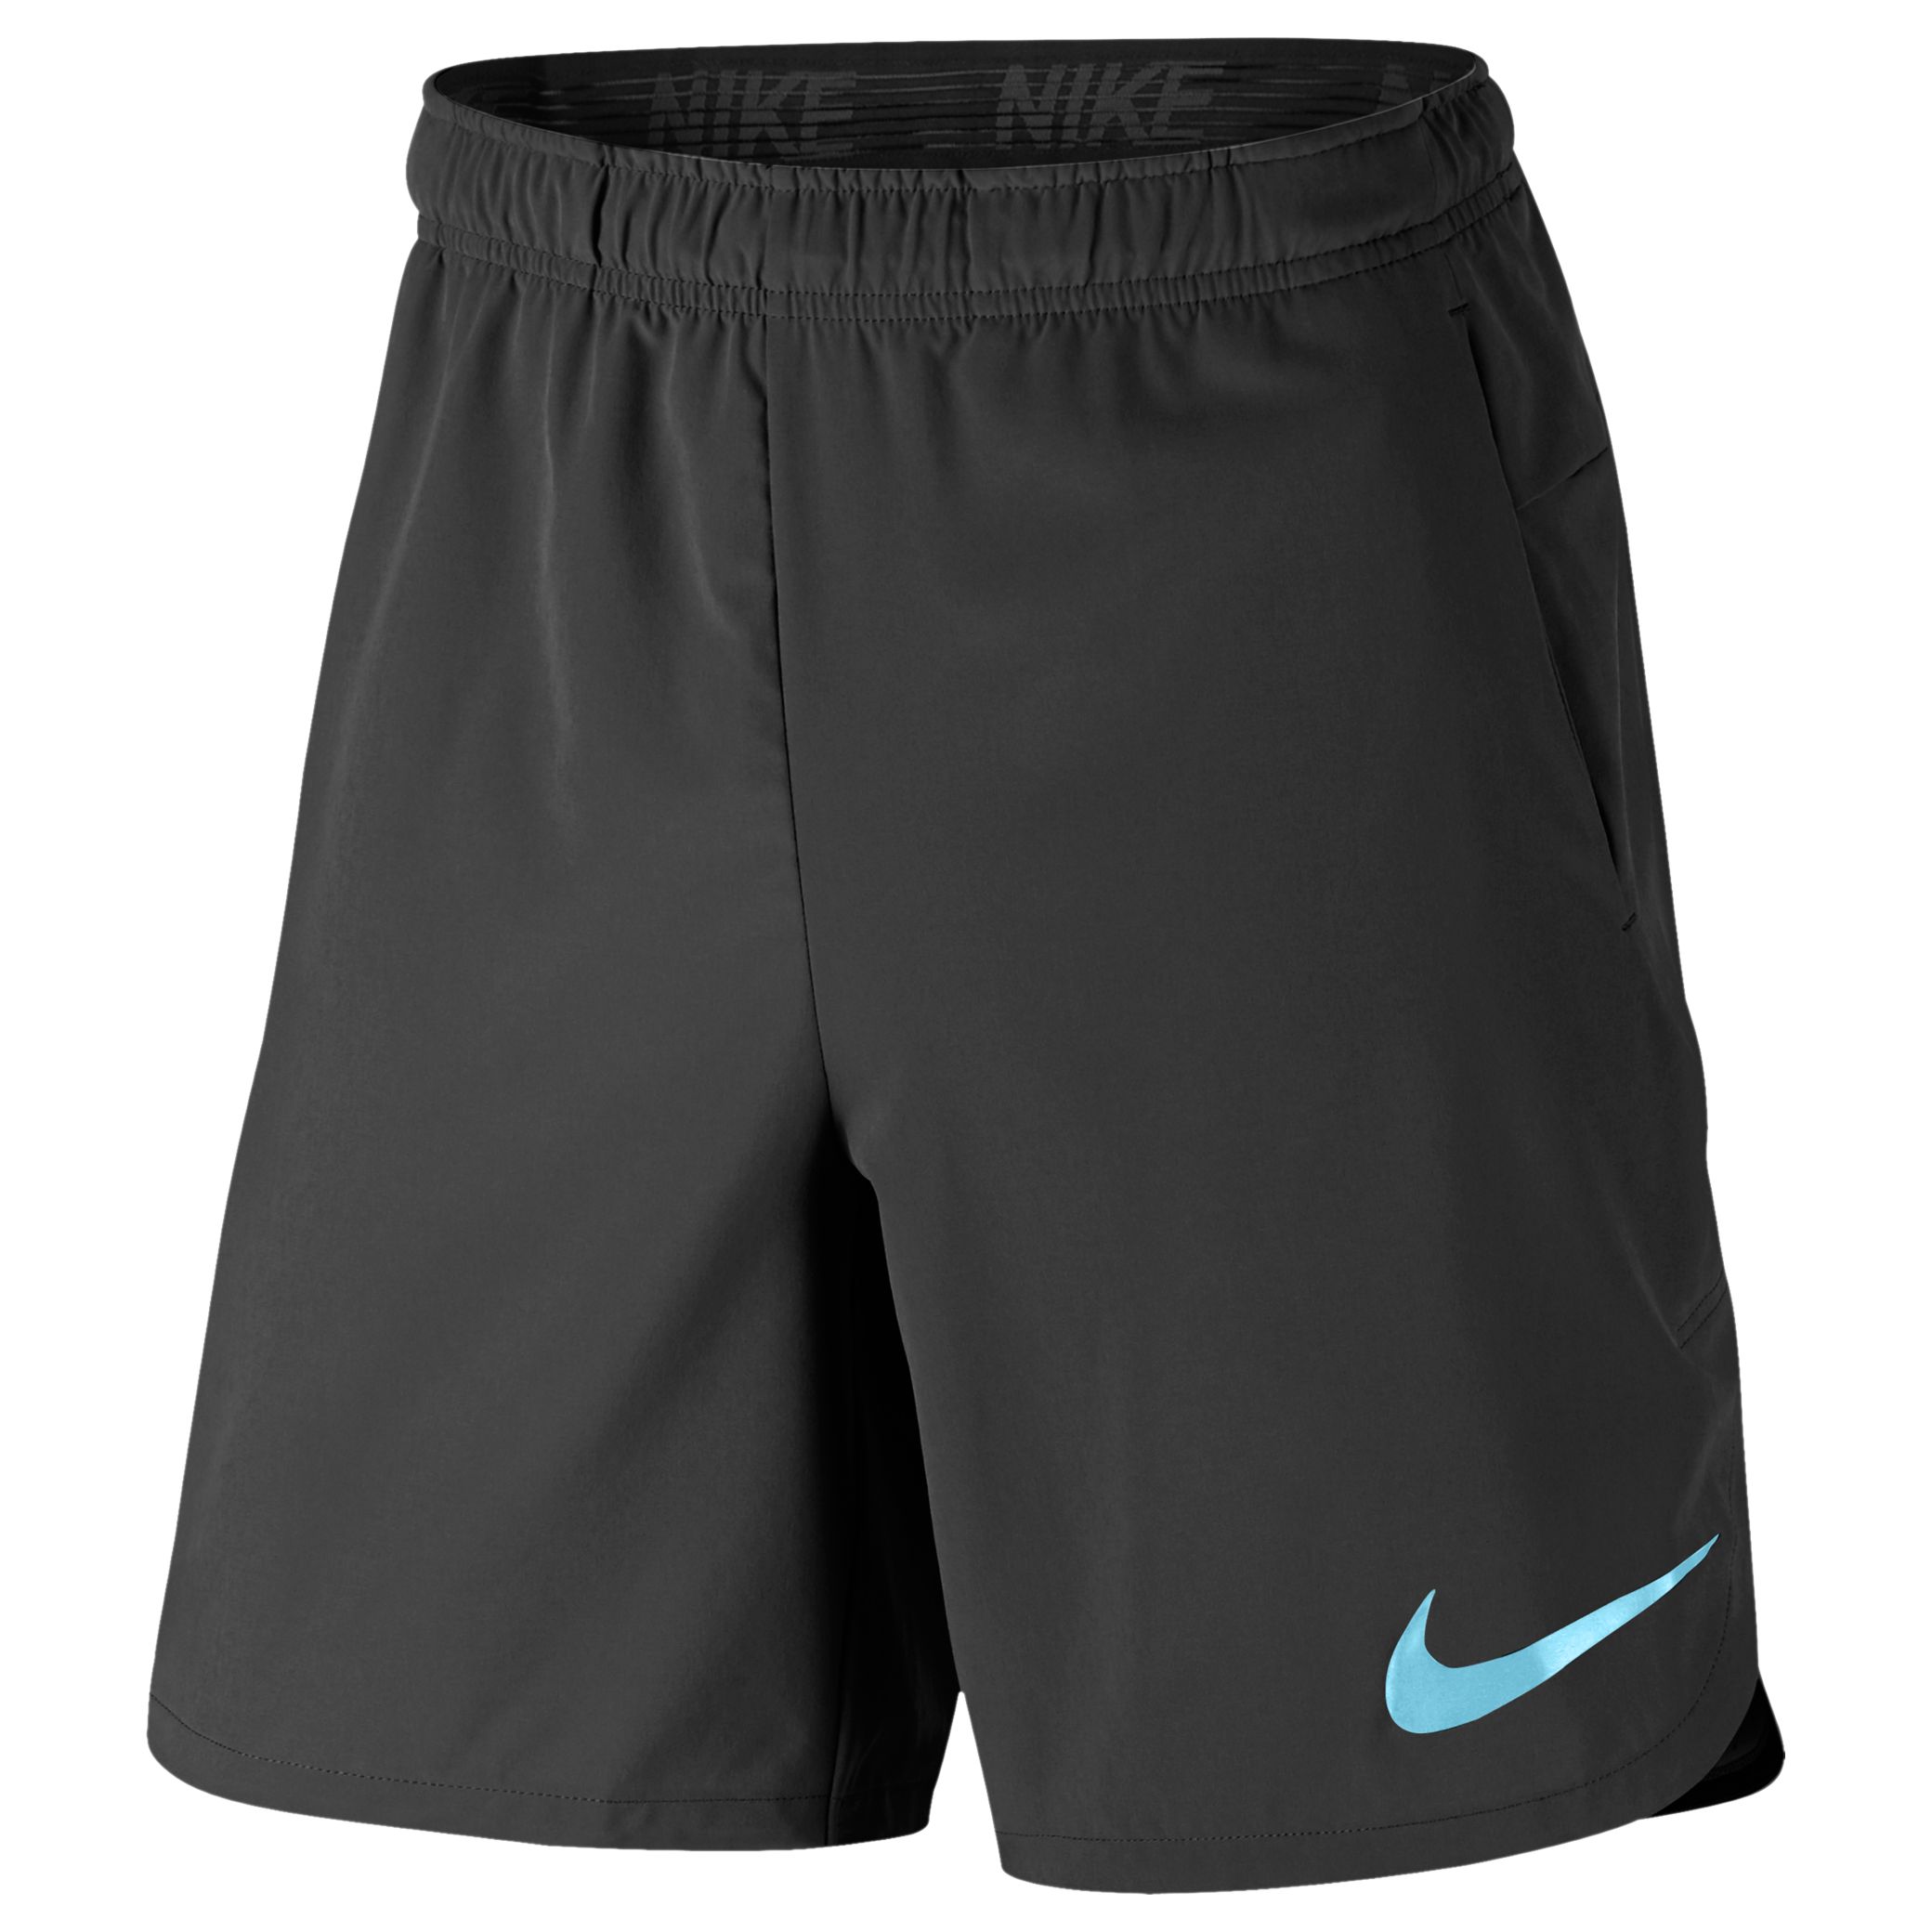 Nike Flex Training Shorts, Black/Blue, M